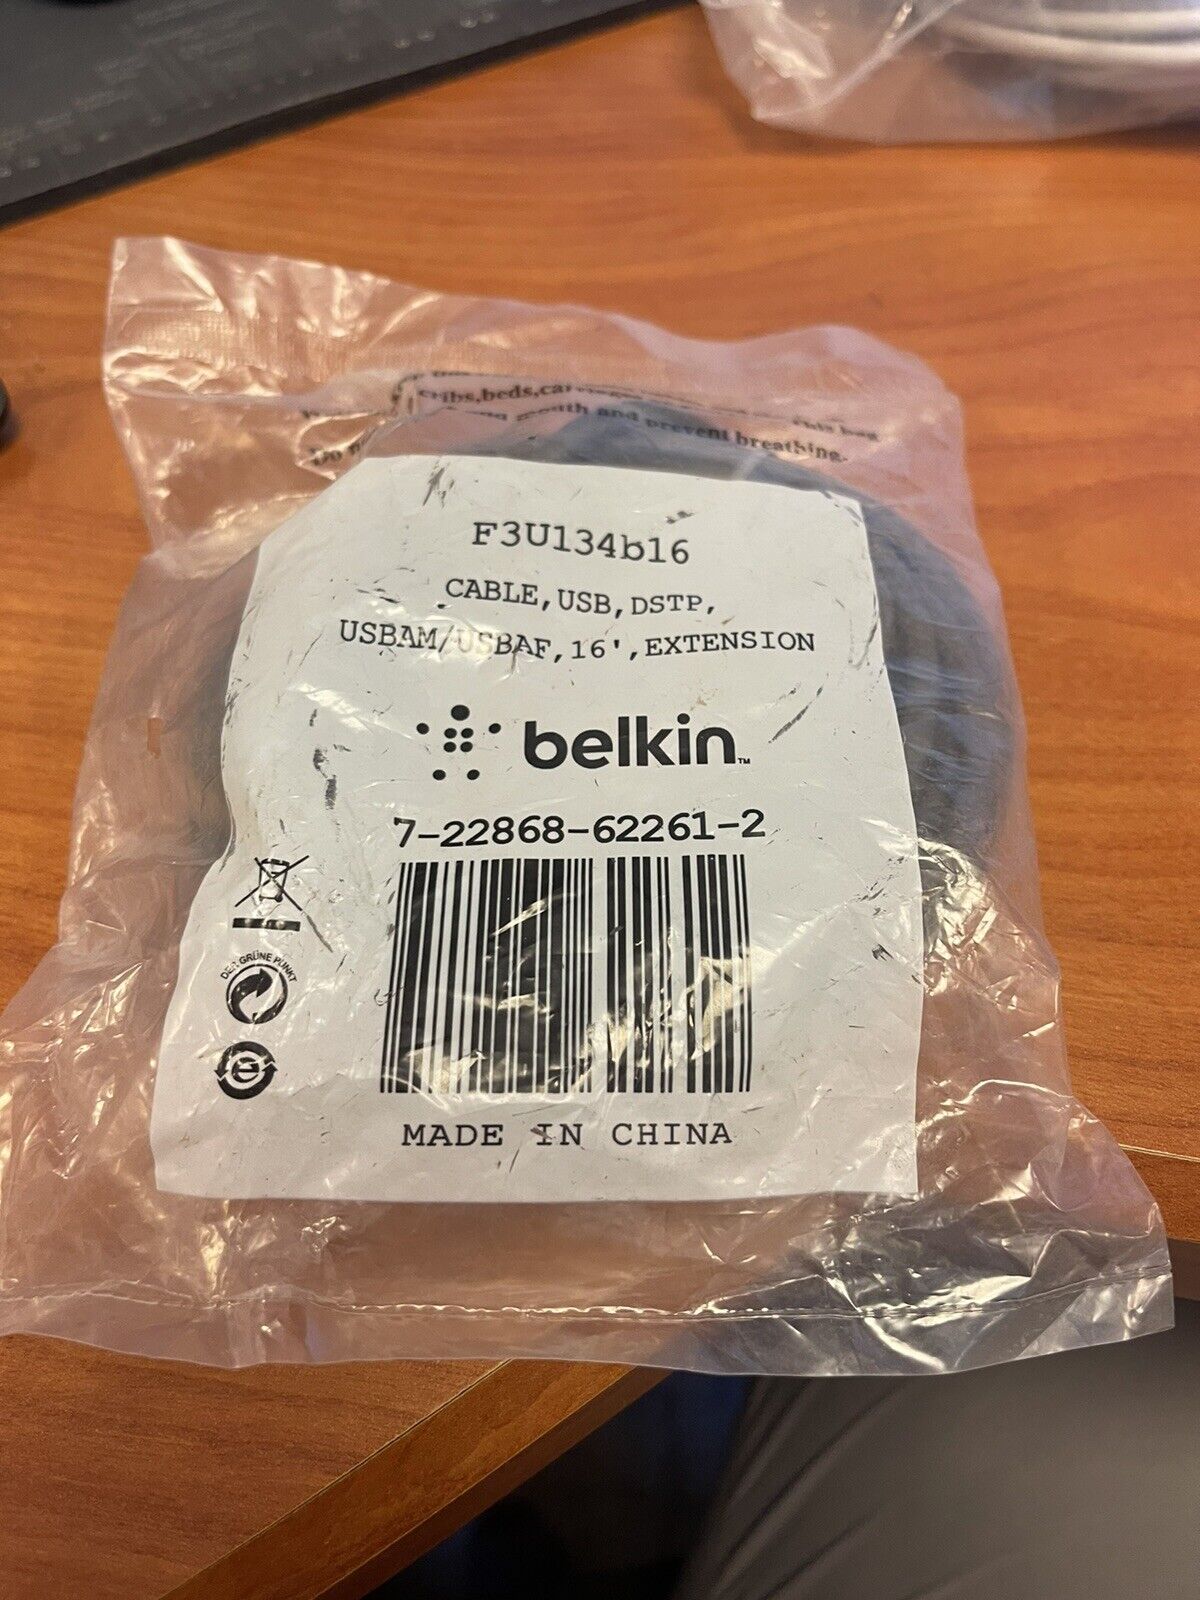 BELKIN F3U134B16 CABLE, USB, DSTP, USBAM/USBAF, 16', EXTENSION